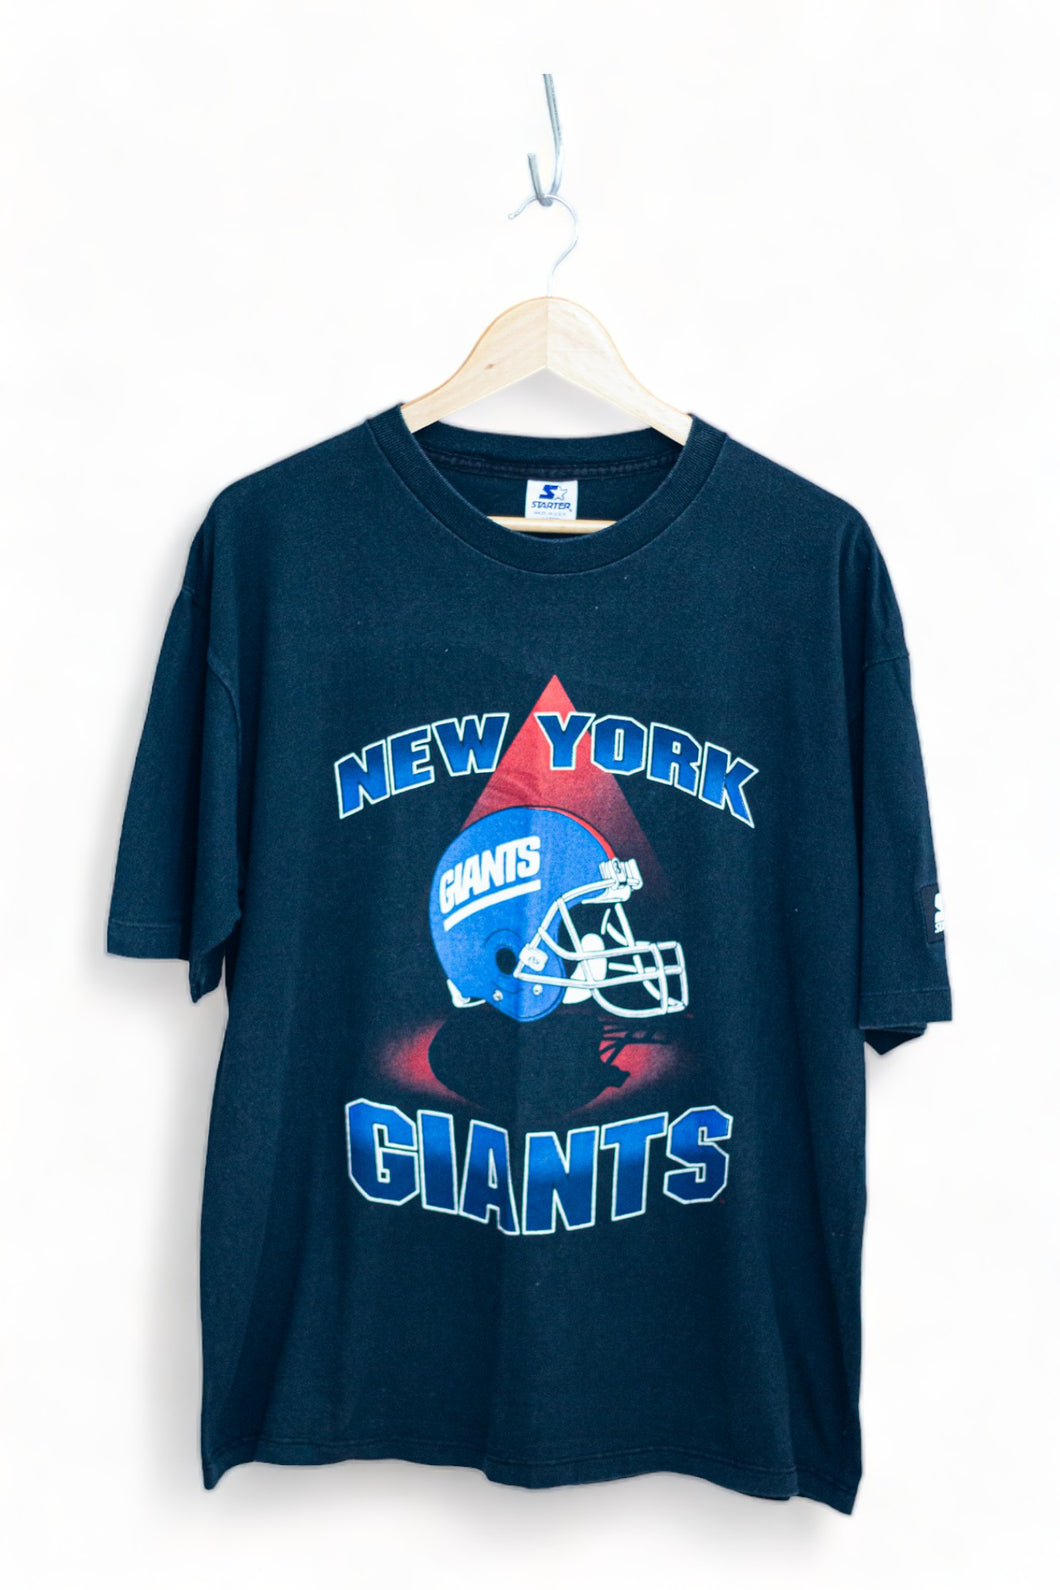 New York Giants - Team Graphic NFL T-Shirt (L)